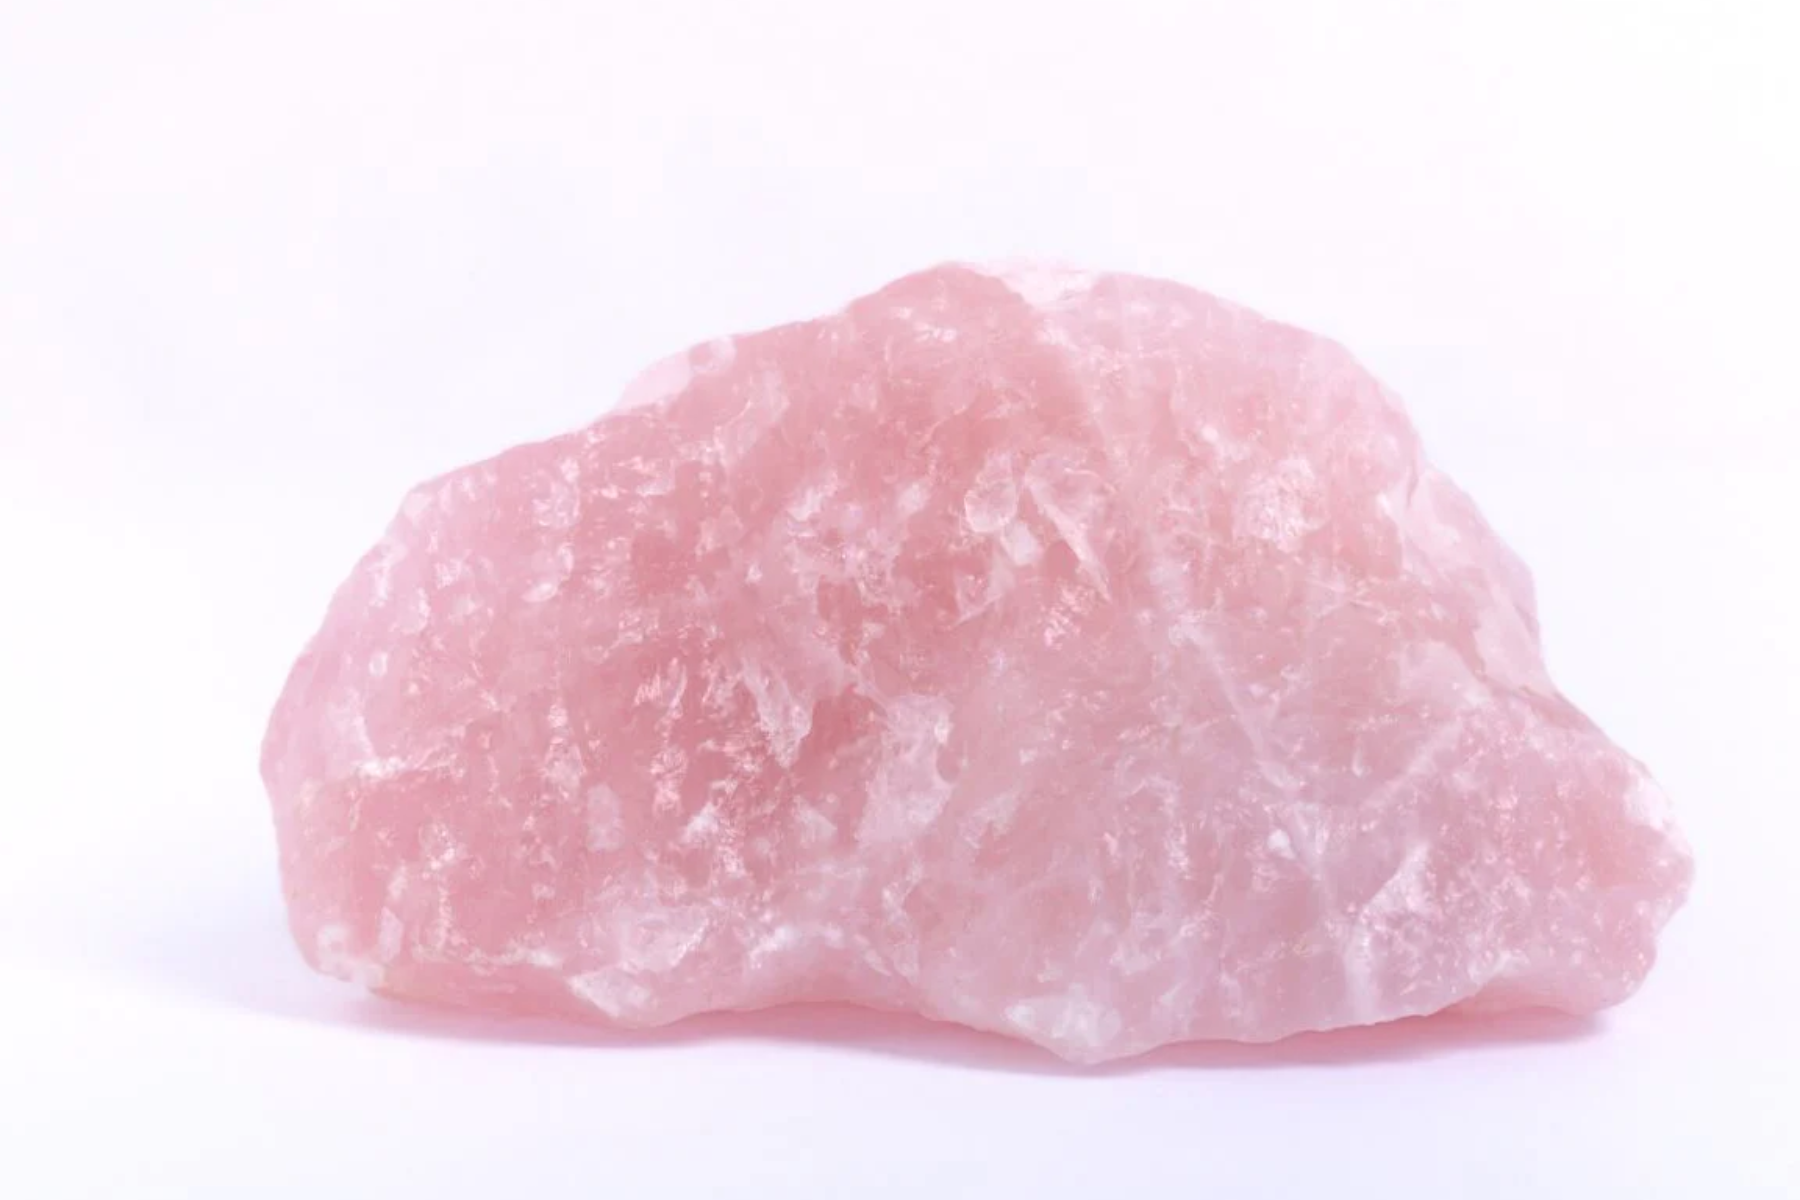 Pinkrose quartz in a rock-shaped